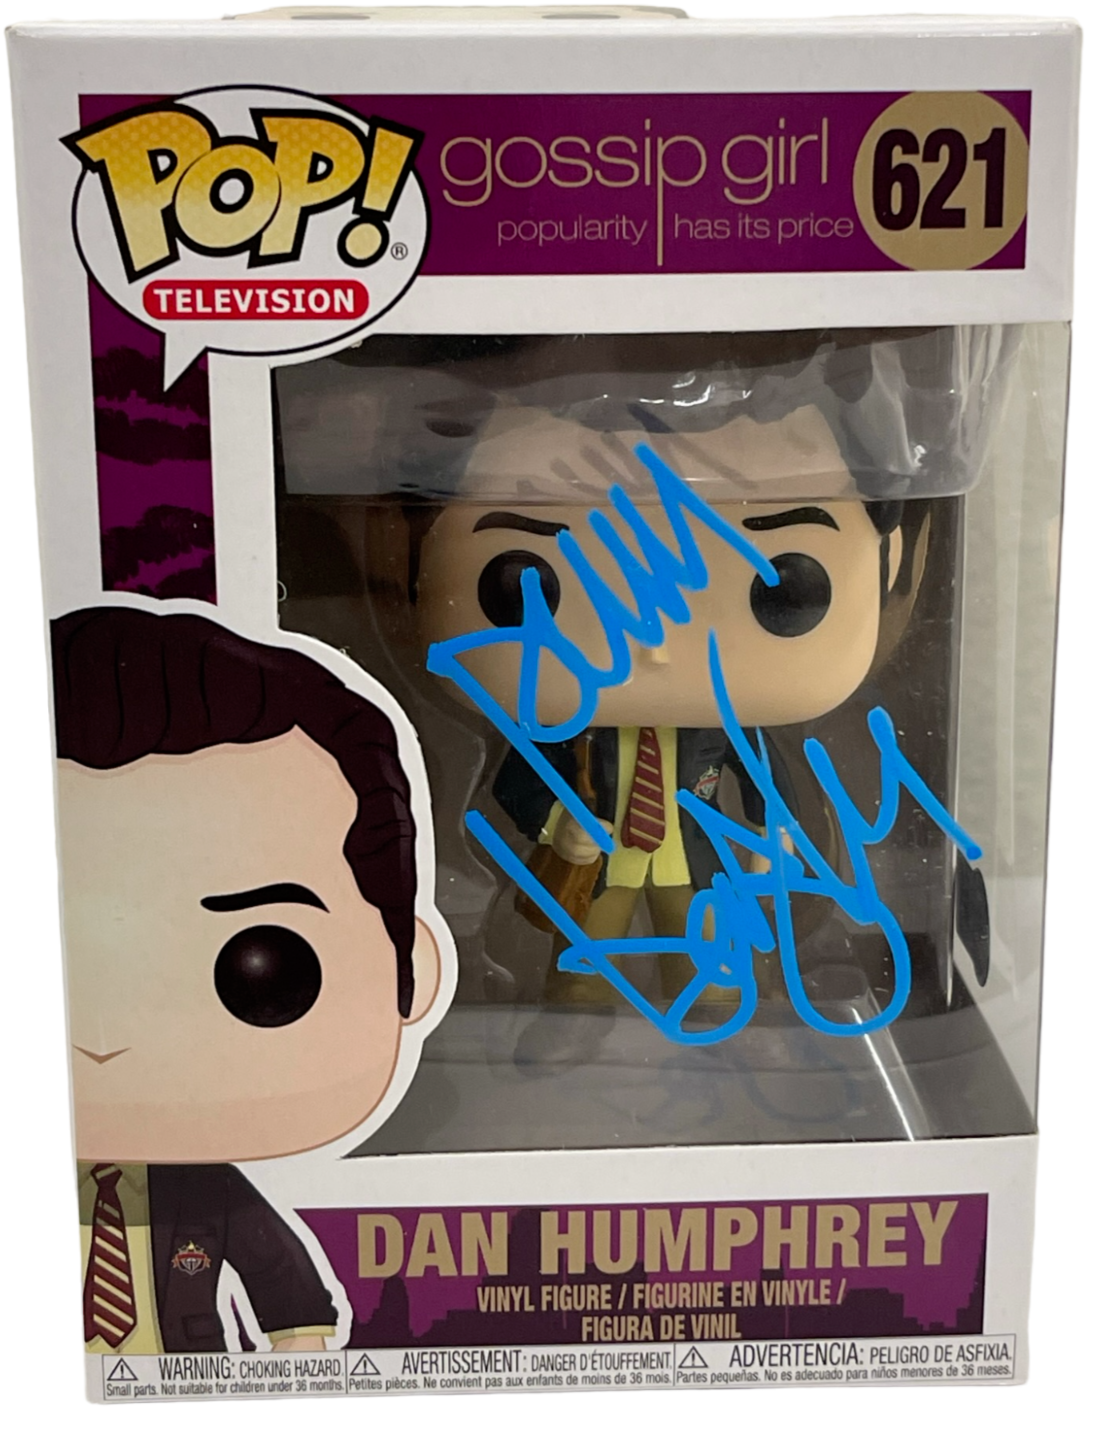 Penn Badgley Authentic Autographed Dan Humphrey Gossip Girl 621 Funko